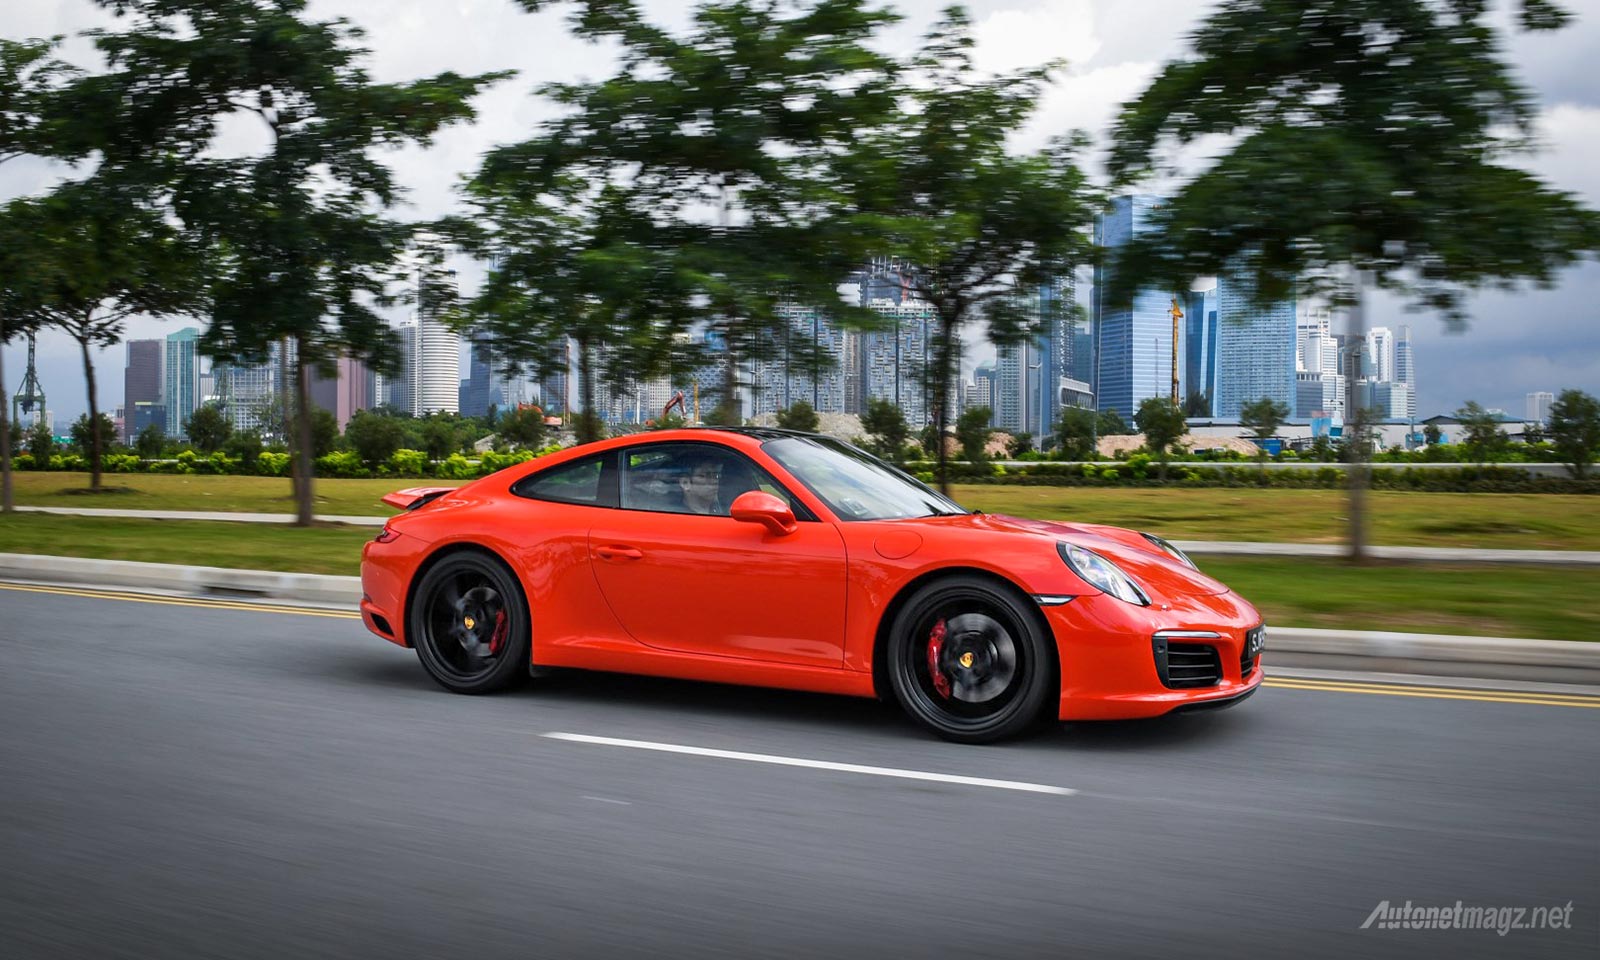 International, Review and test drive Porsche Carrera S Indonesia by AutonetMagz in Singapore: Driving Impression Porsche 911 Carrera S: Revolusioner Tapi Setia Pada Sejarahnya!